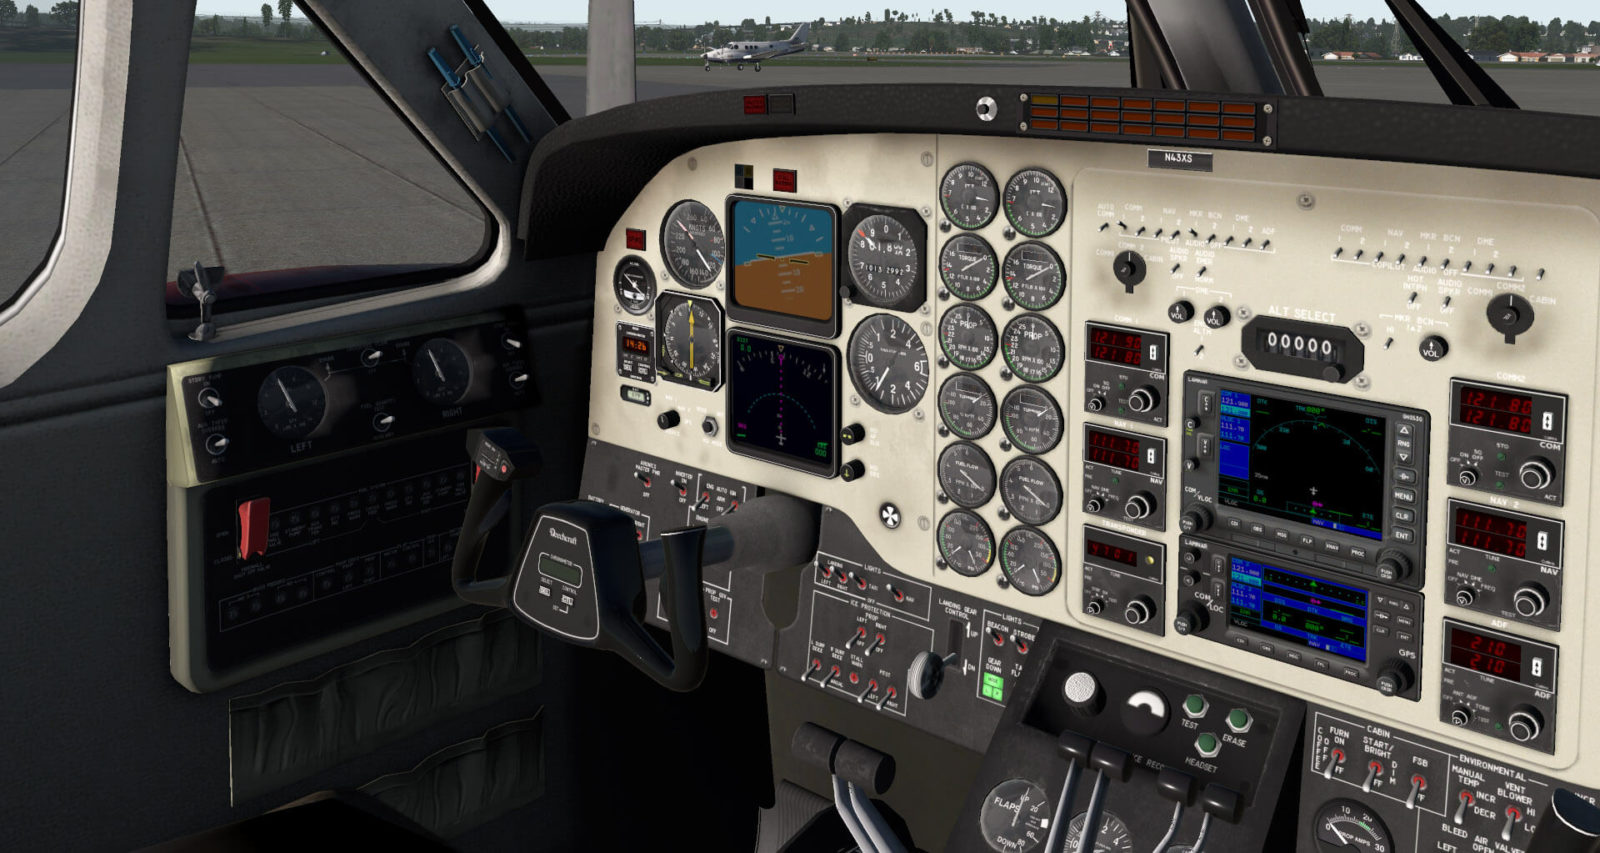 X-Plane 11 Flight Simulator